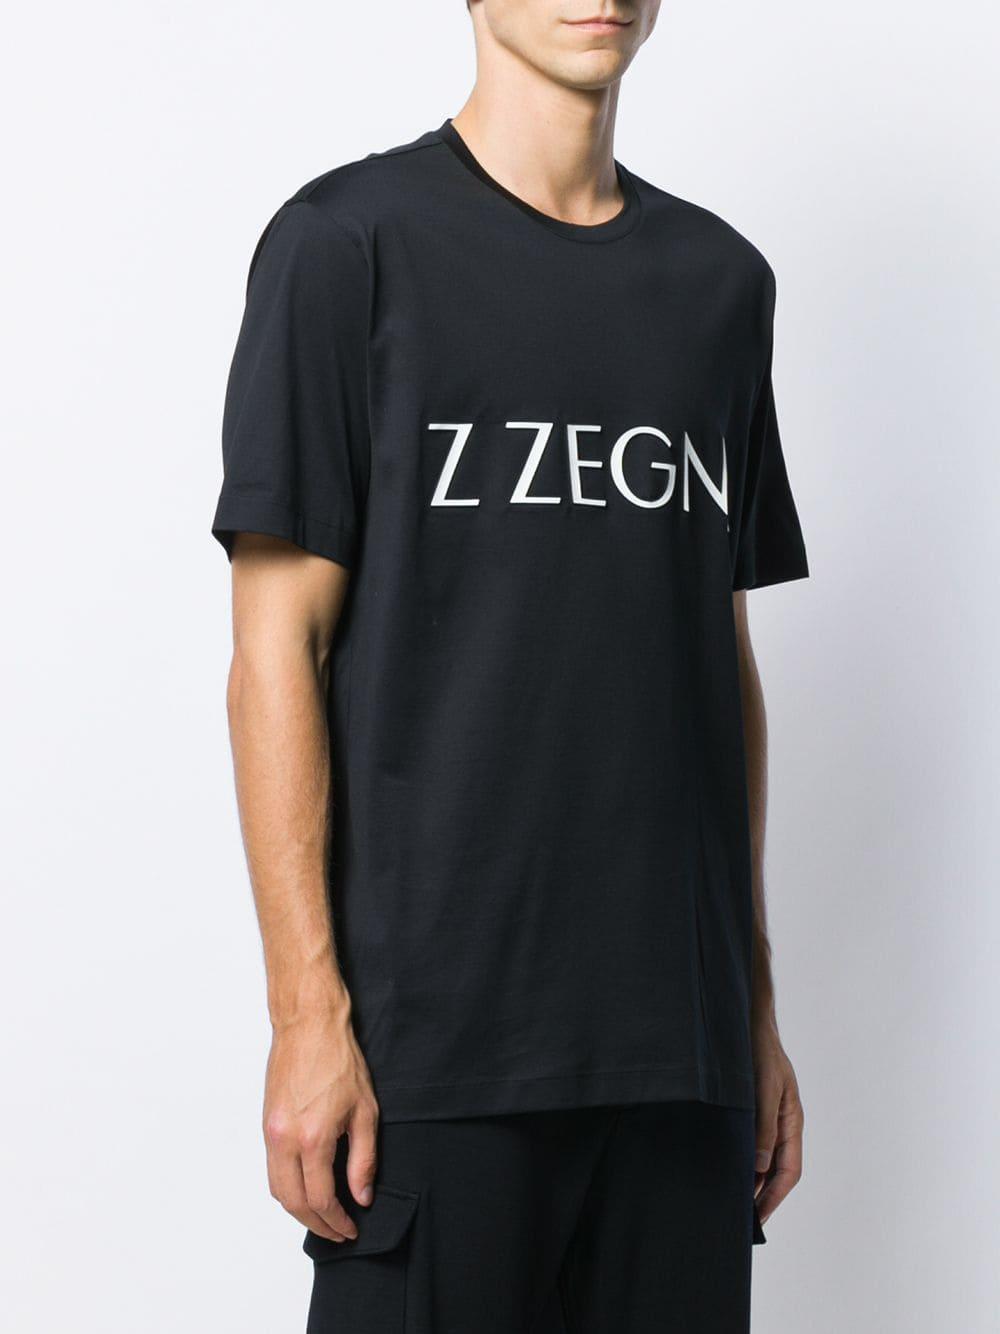 Z Zegna Cotton Logo Print T-shirt in Blue for Men - Lyst